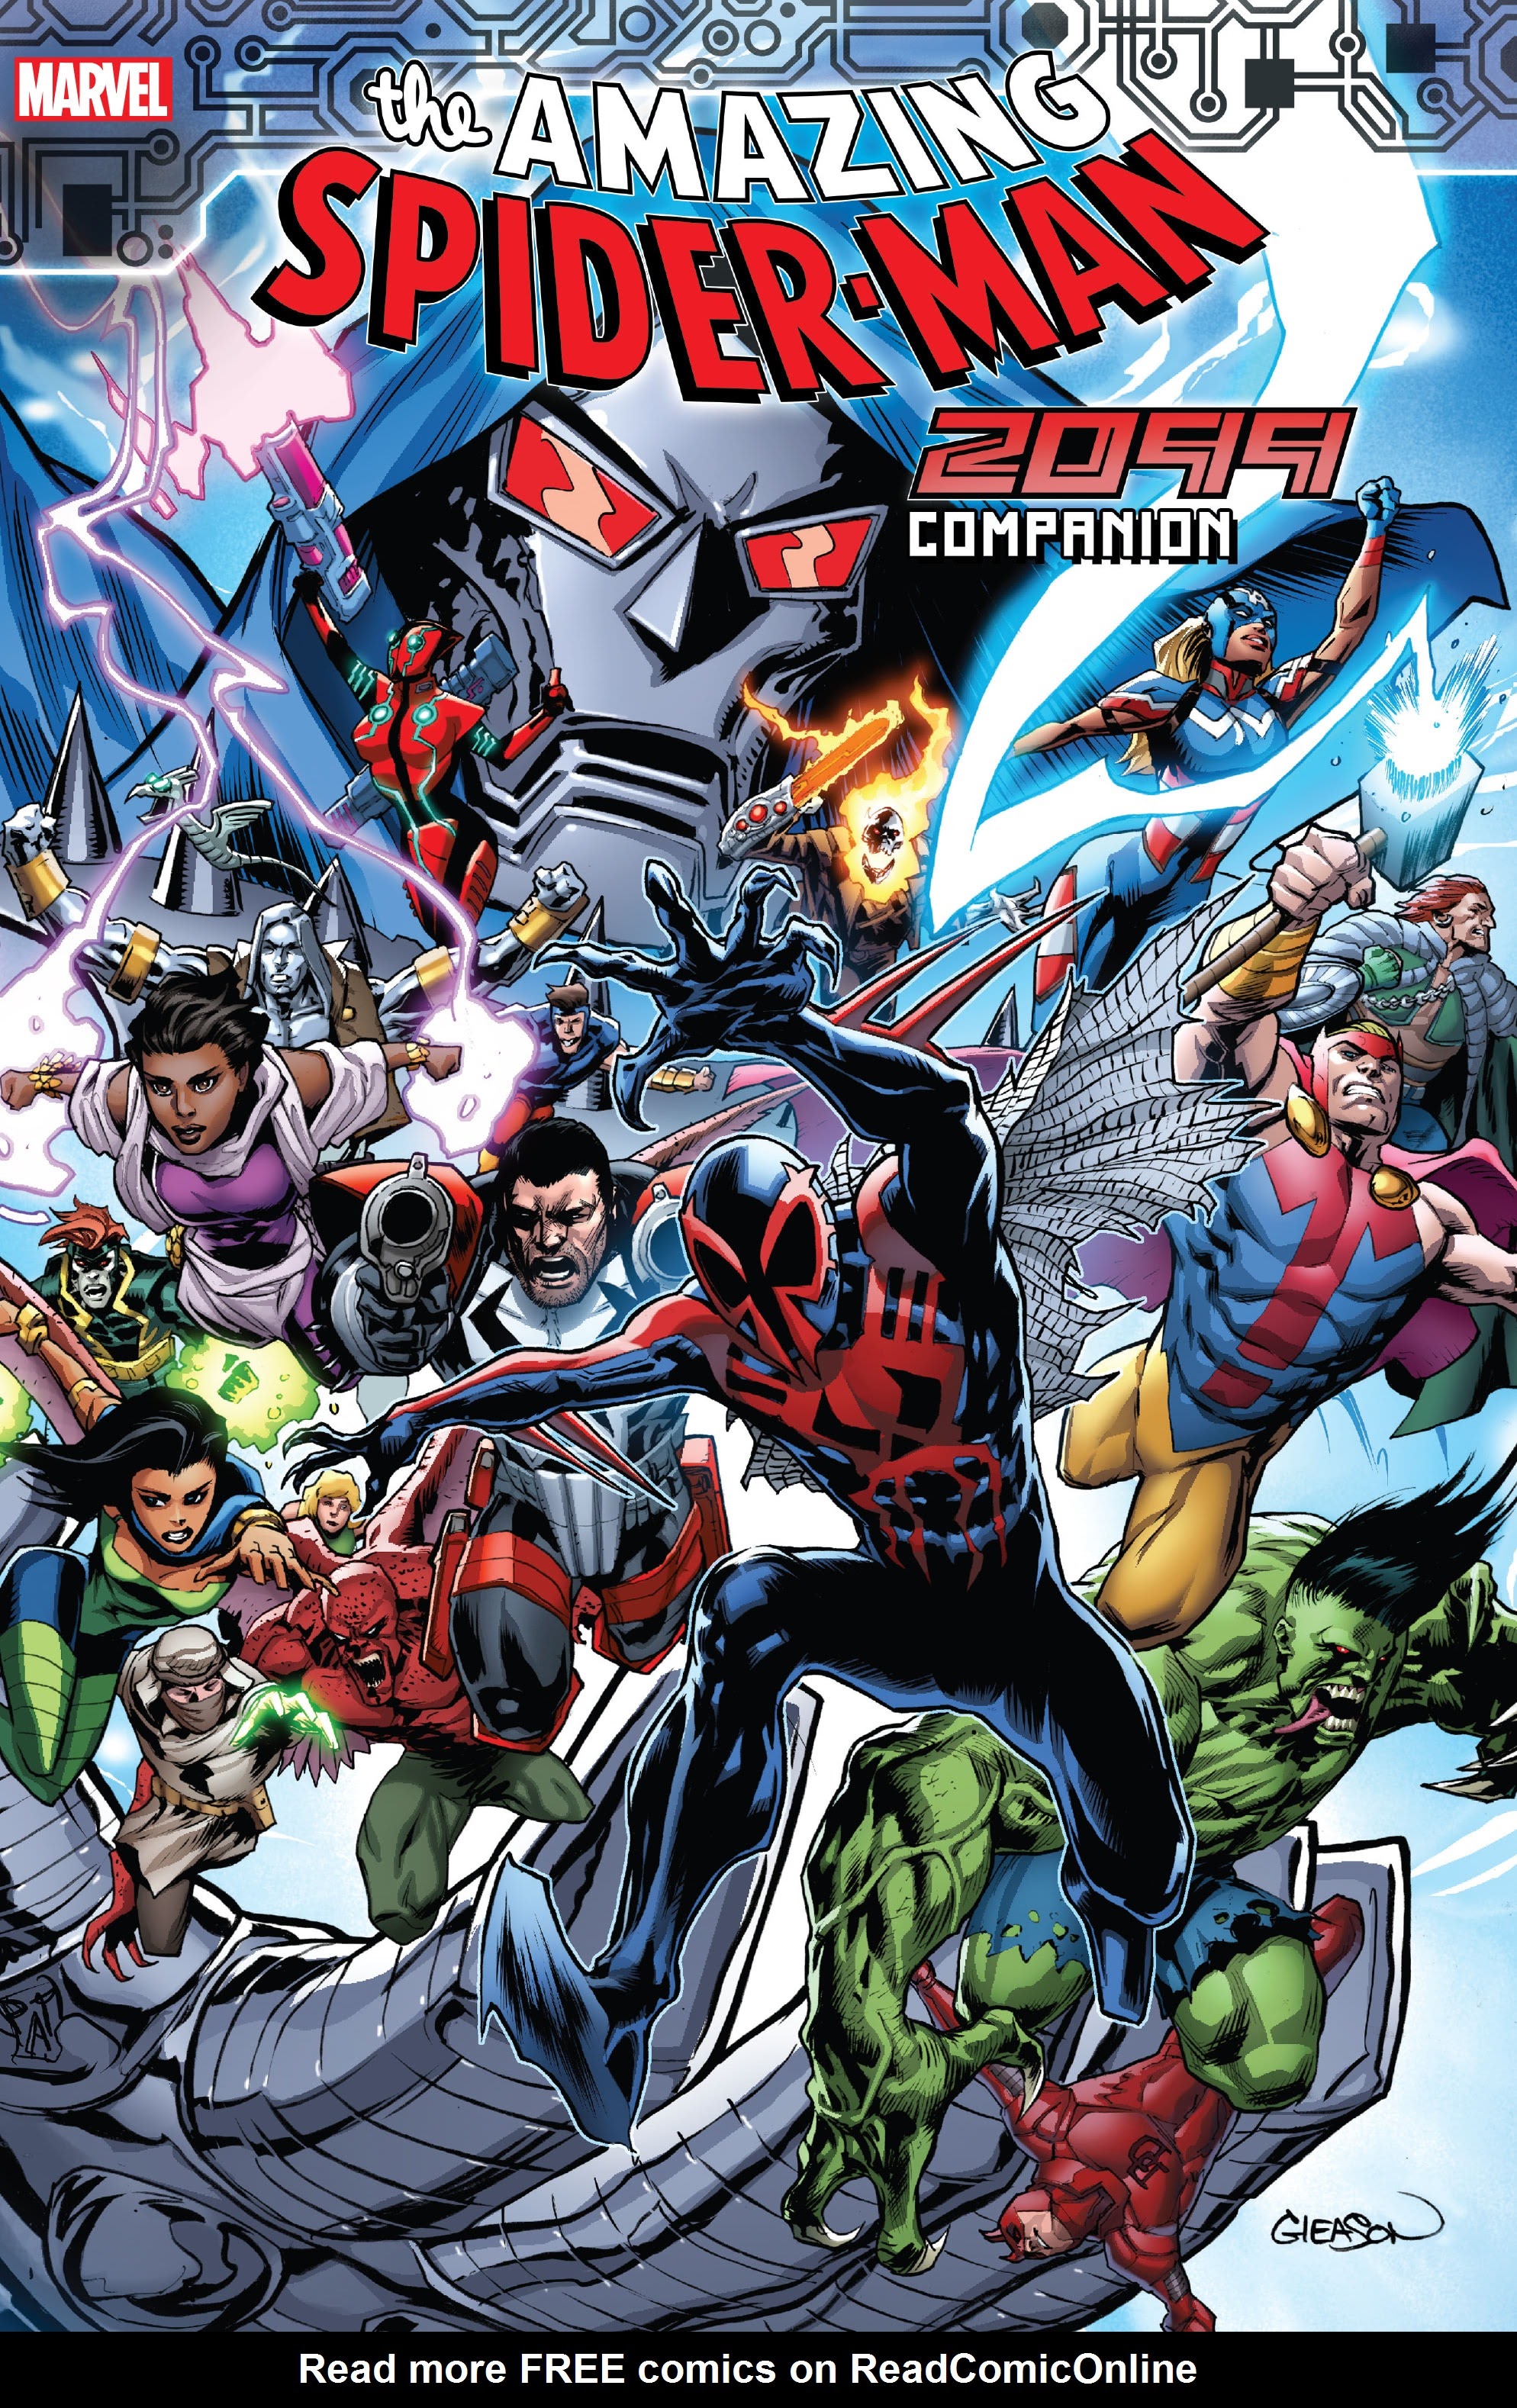 Read online Amazing Spider-Man 2099 Companion comic -  Issue # TPB (Part 1) - 1